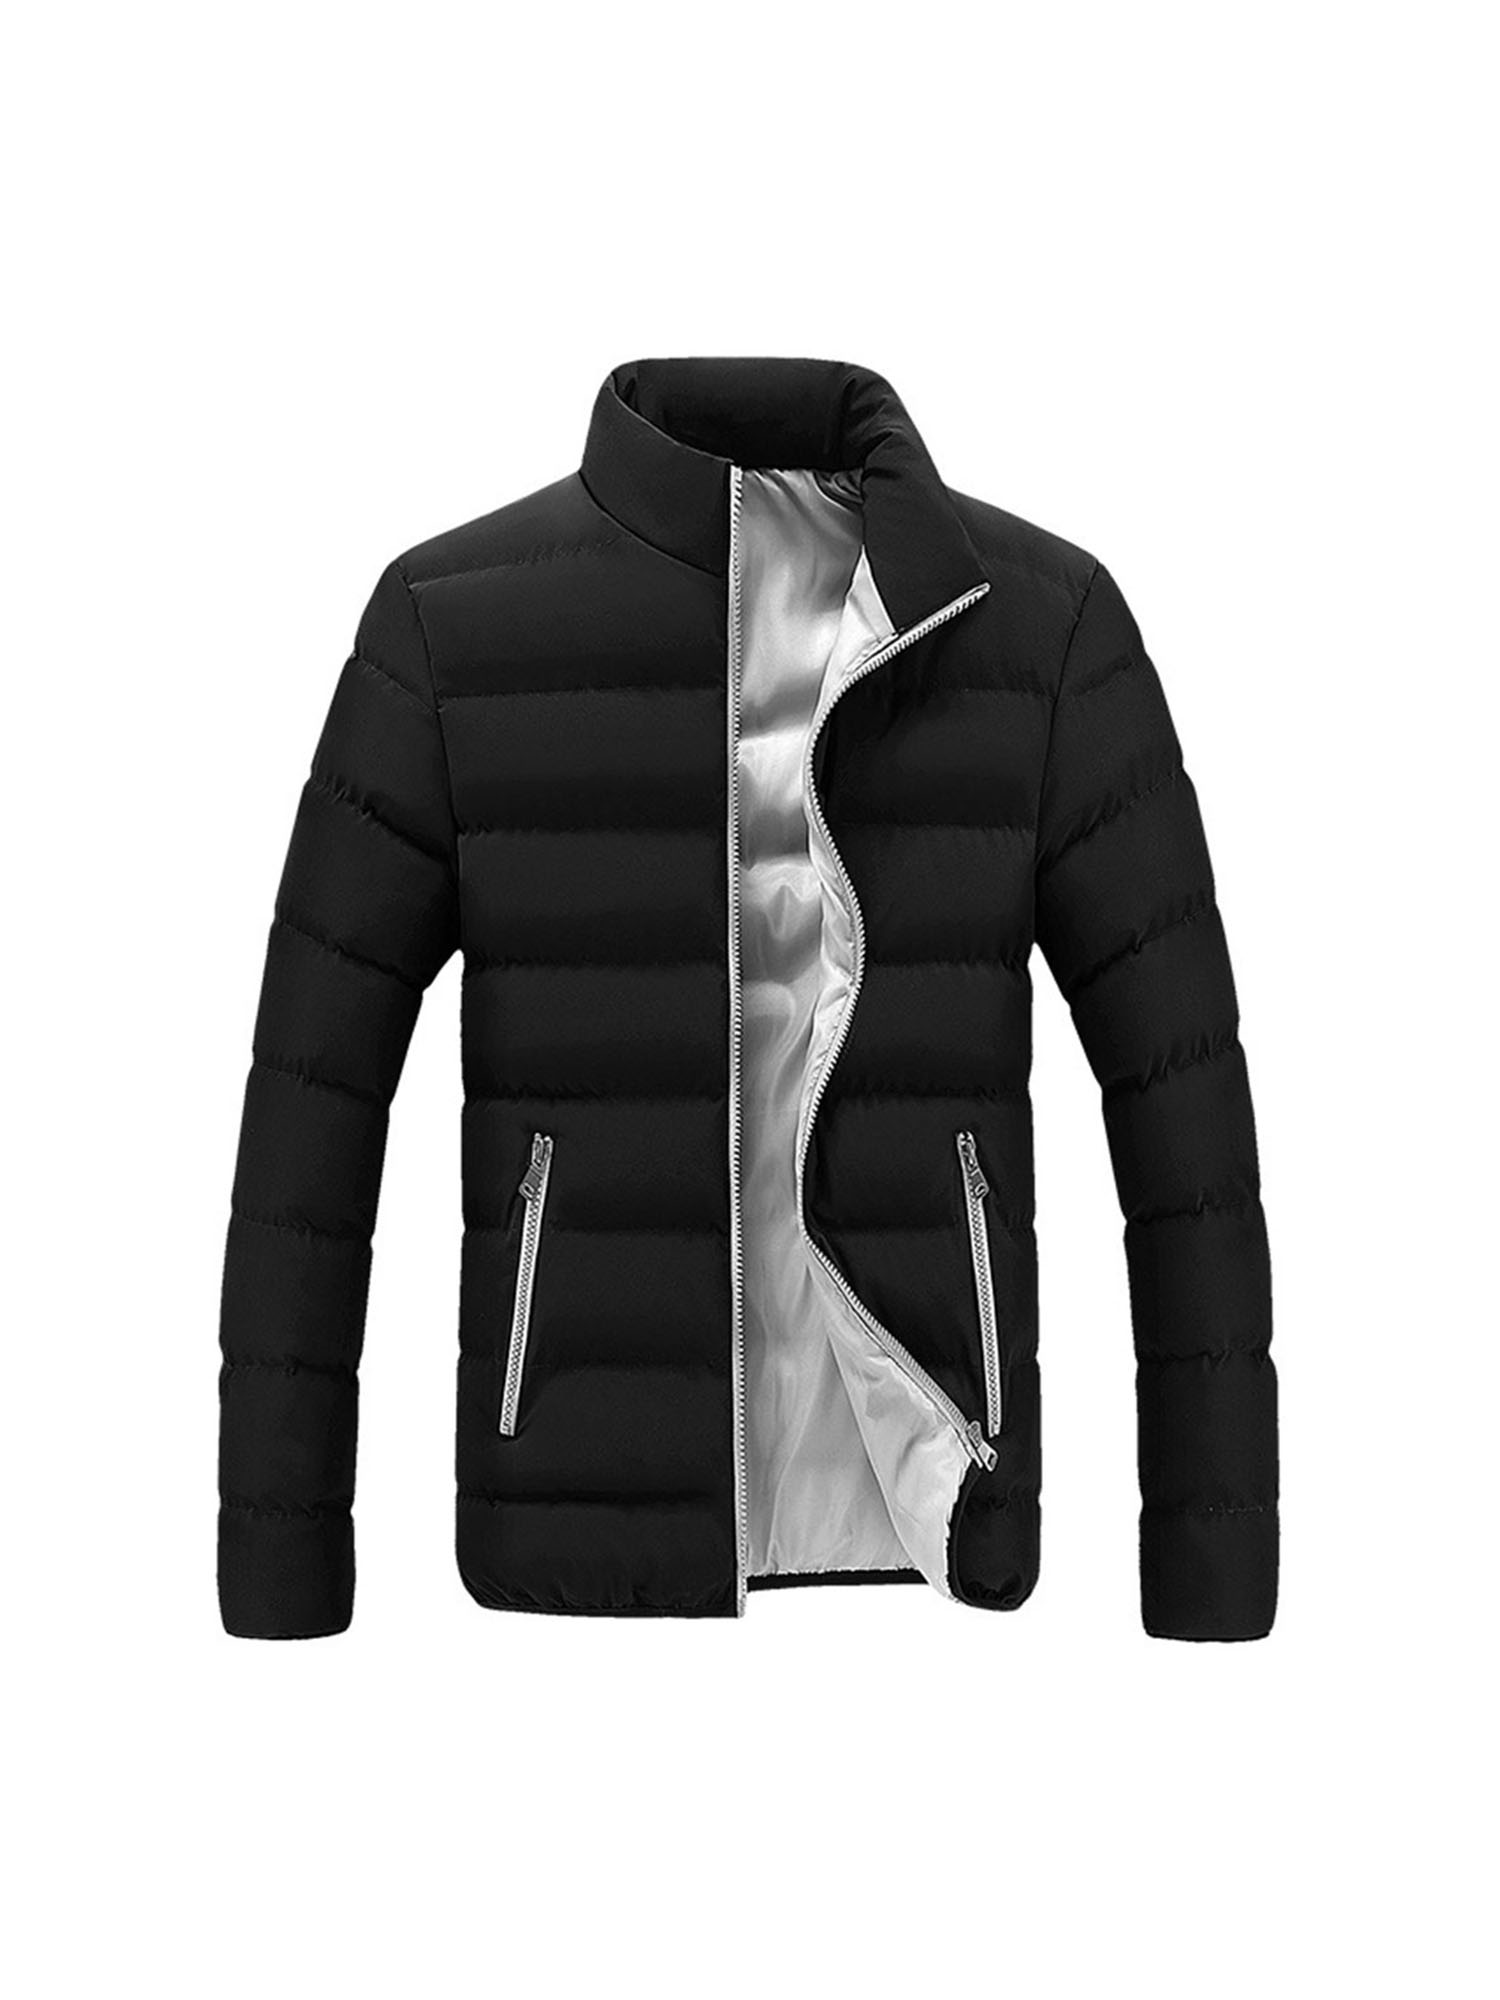 Black Winter Coat for Men - All Star Jacket